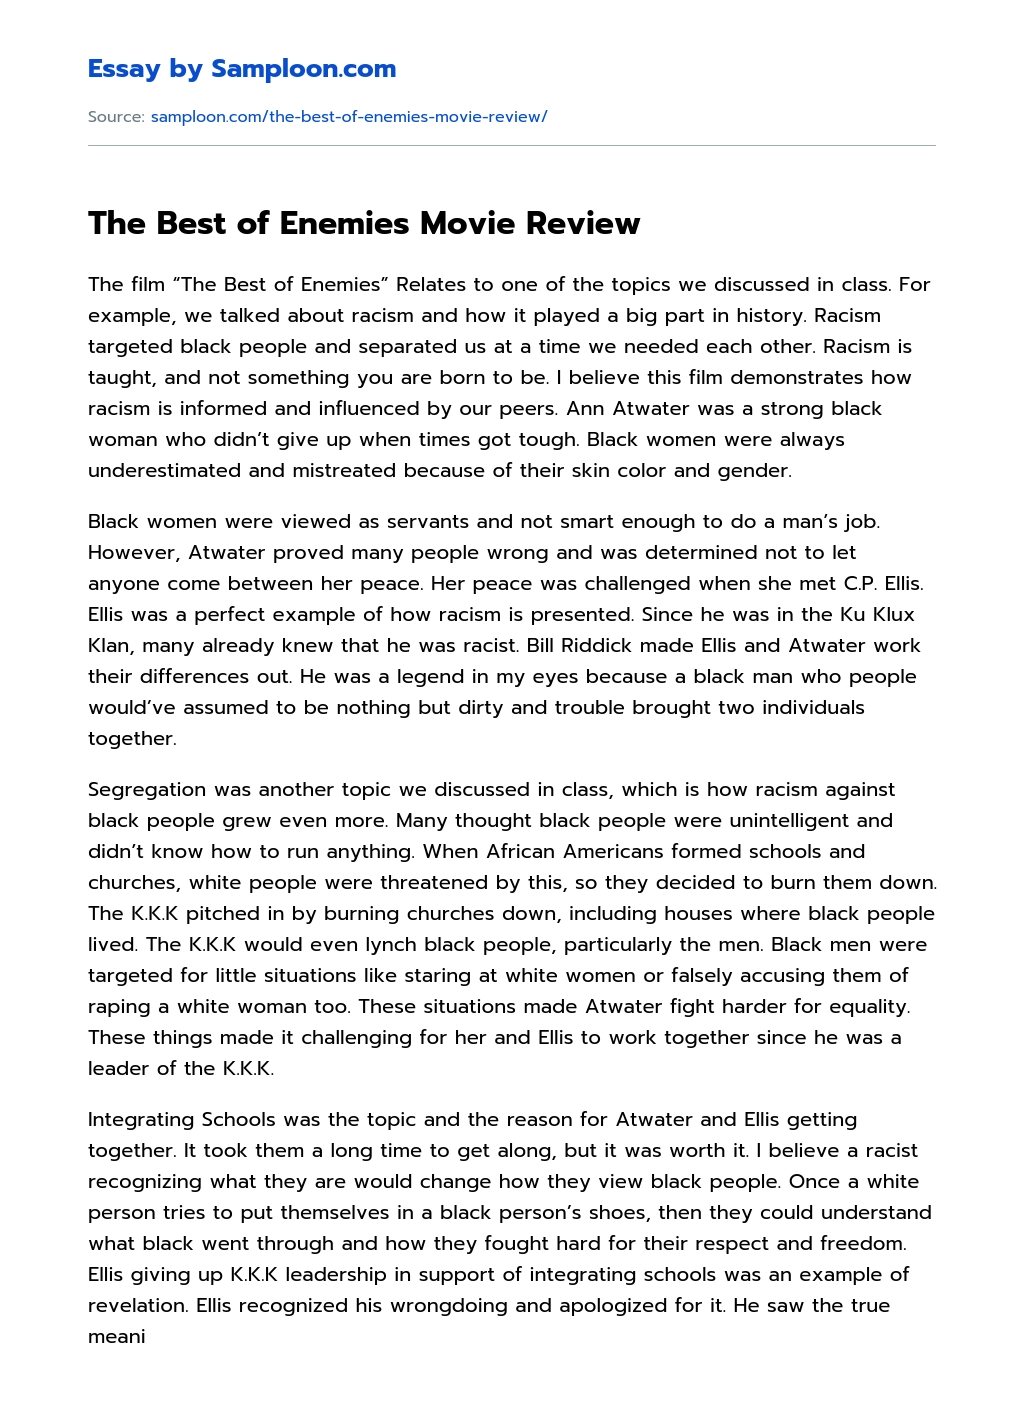 The Best of Enemies Movie Review essay